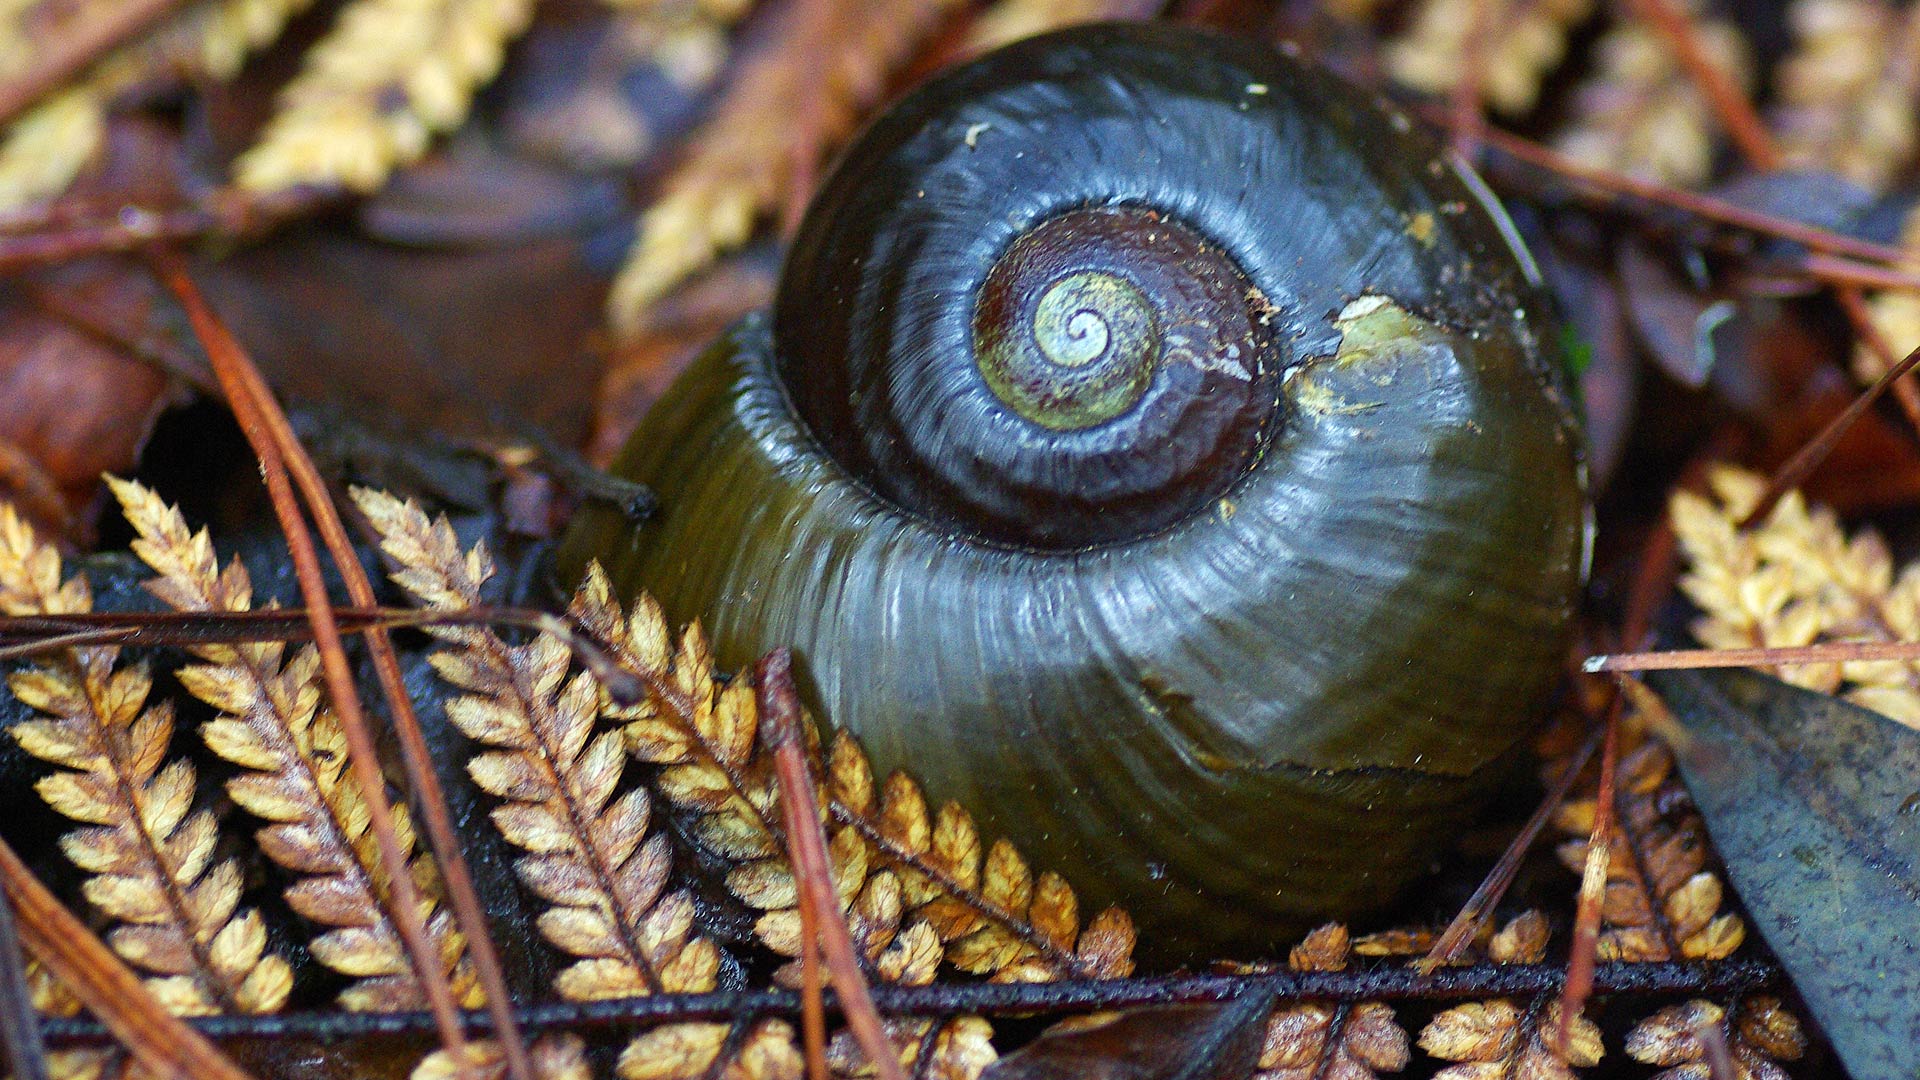 Kauri snail/pupurangi: Invertebrates